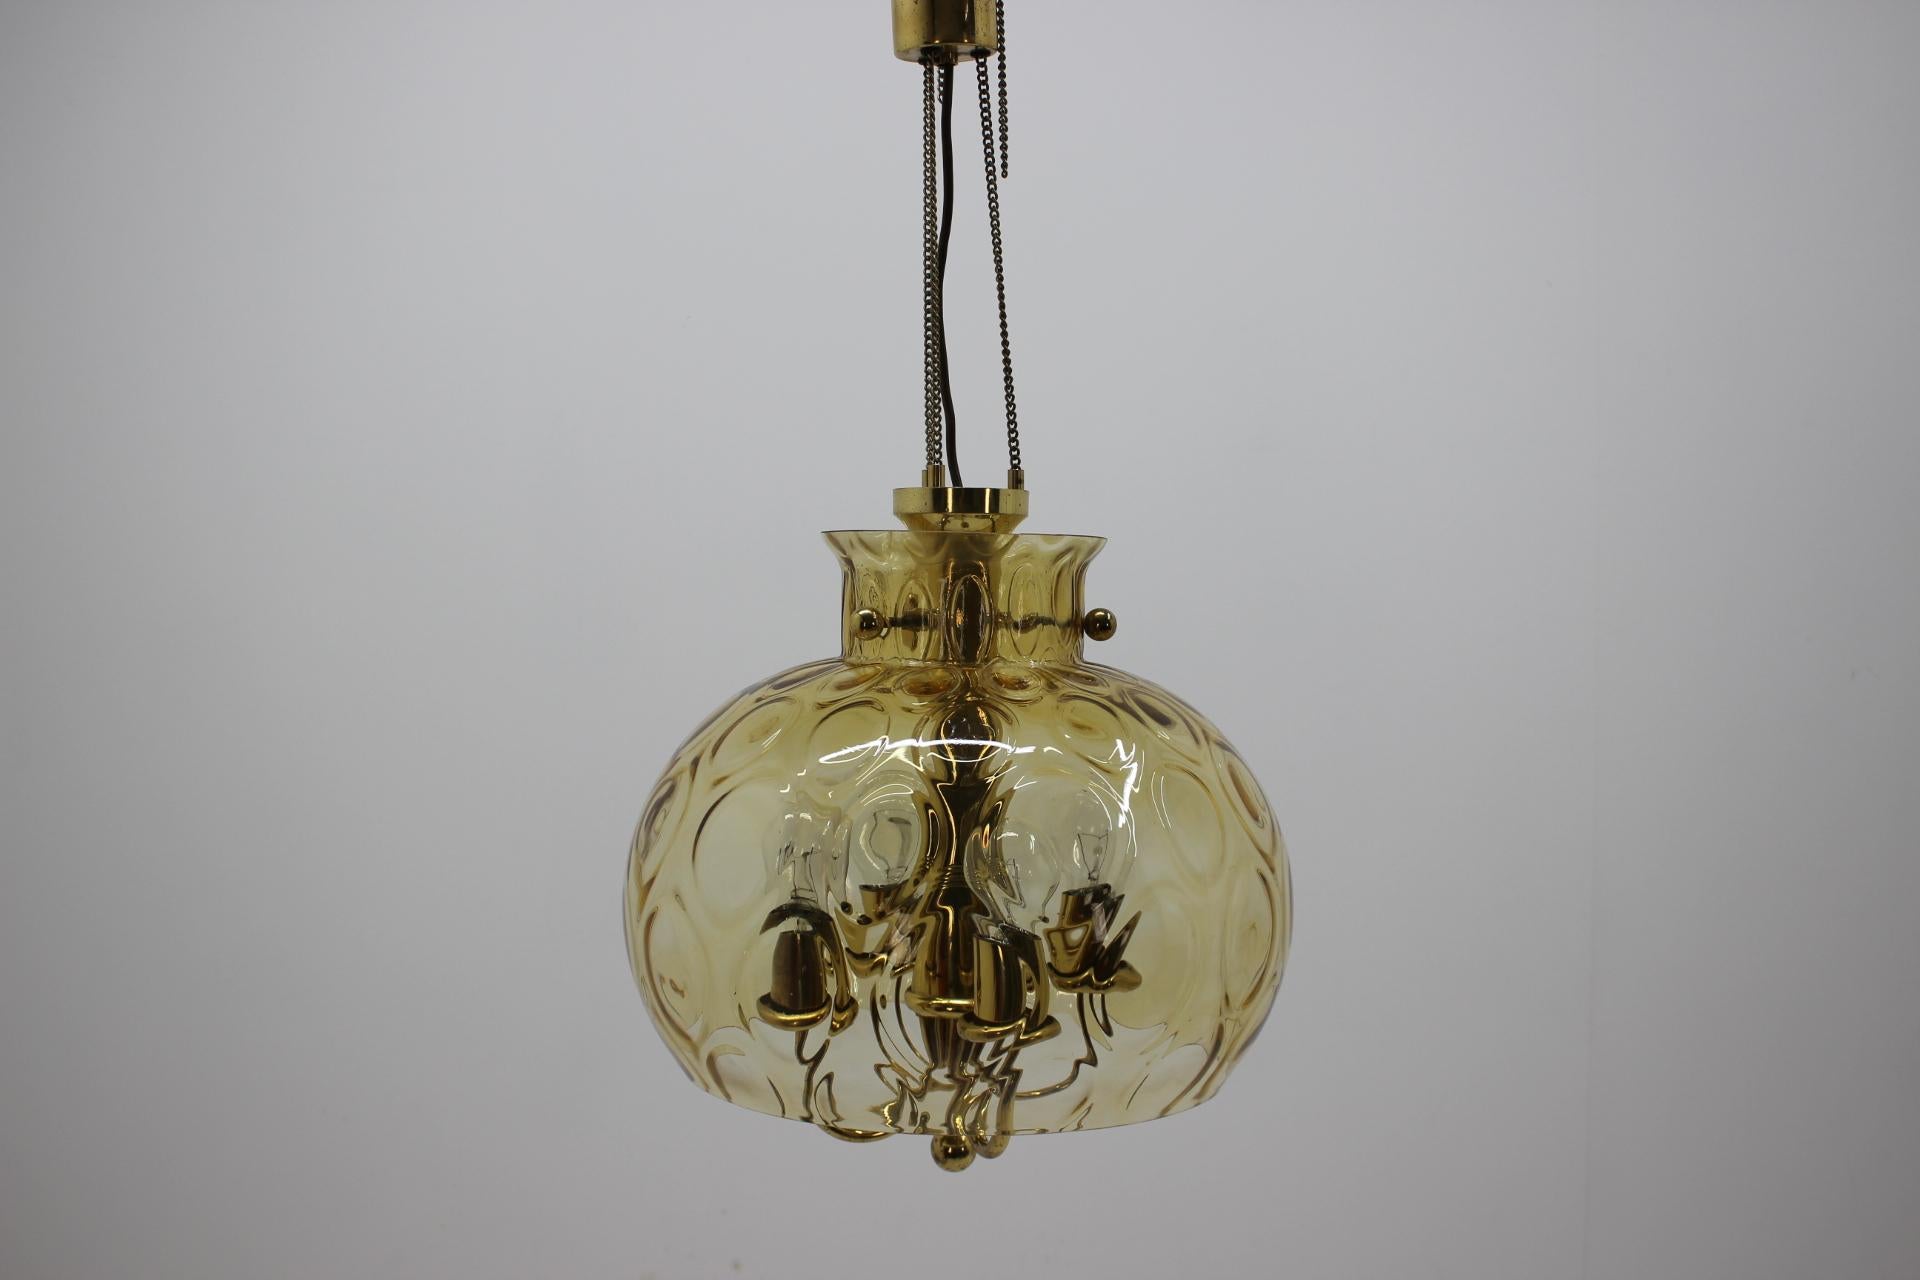 Brass Big pendant by Kamnický Šenov, Czechoslovakia